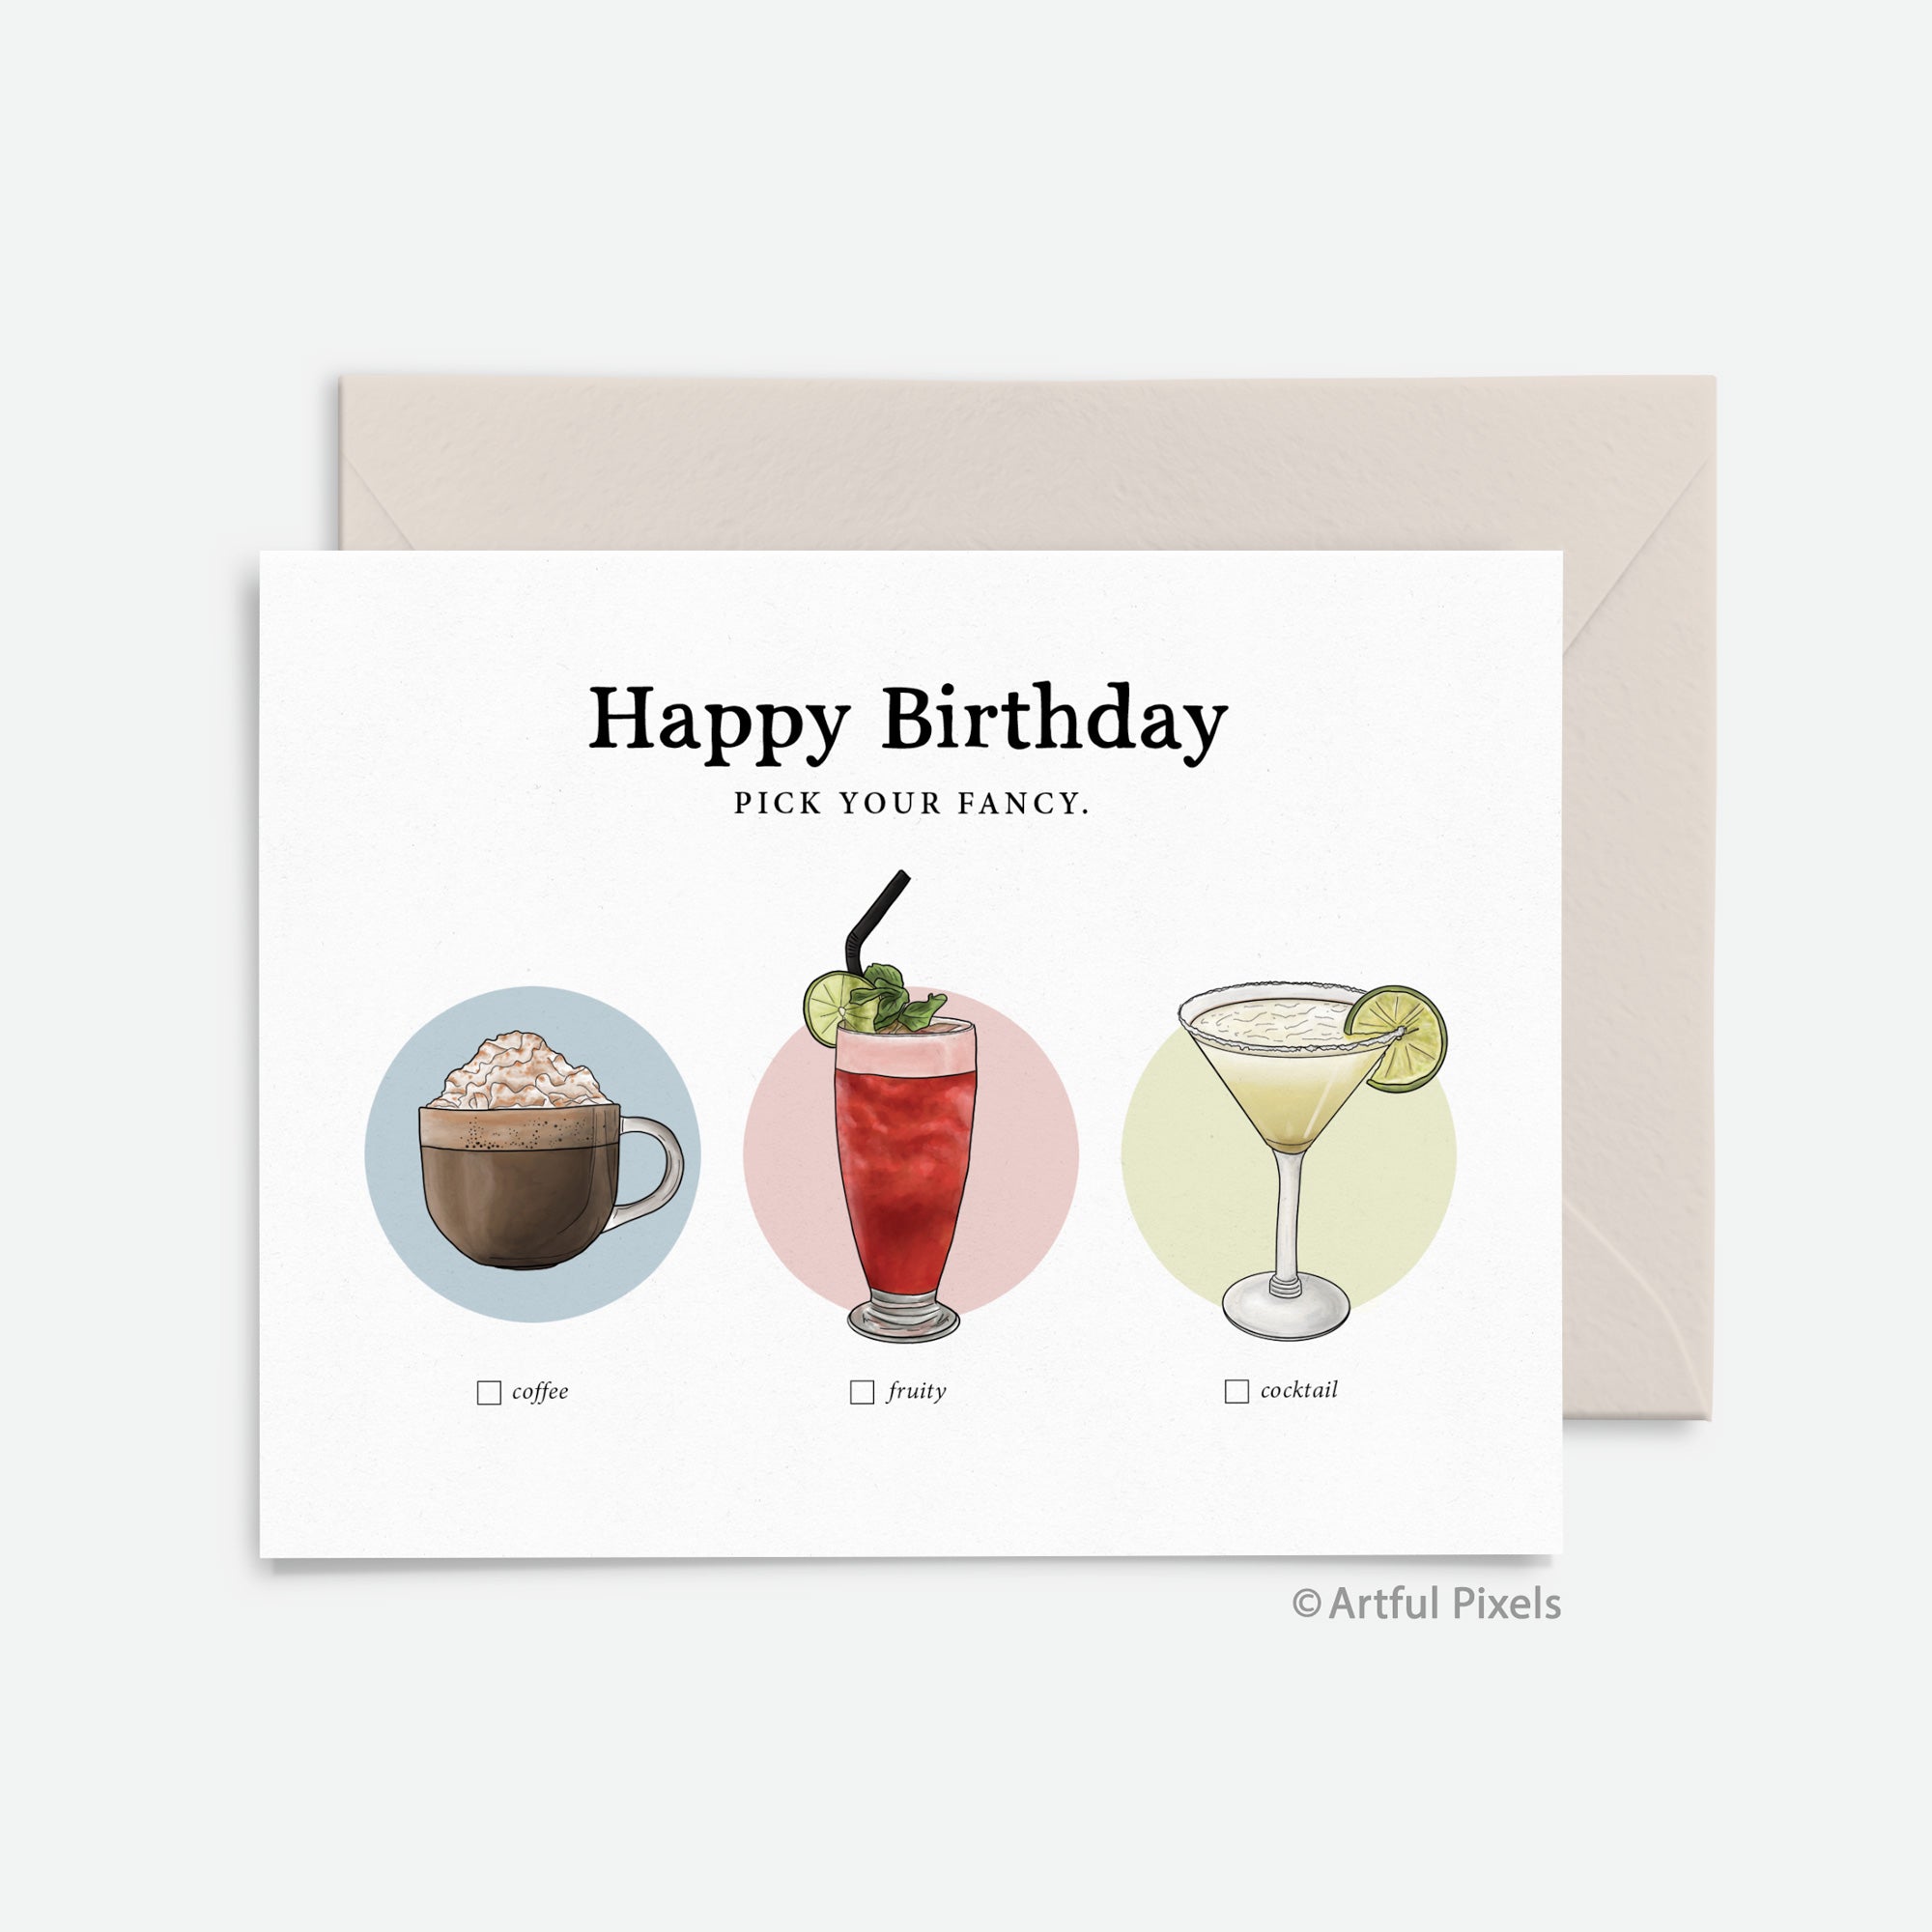 Pick Your Fancy Drink - Happy Birthday Card - Artful Pixels